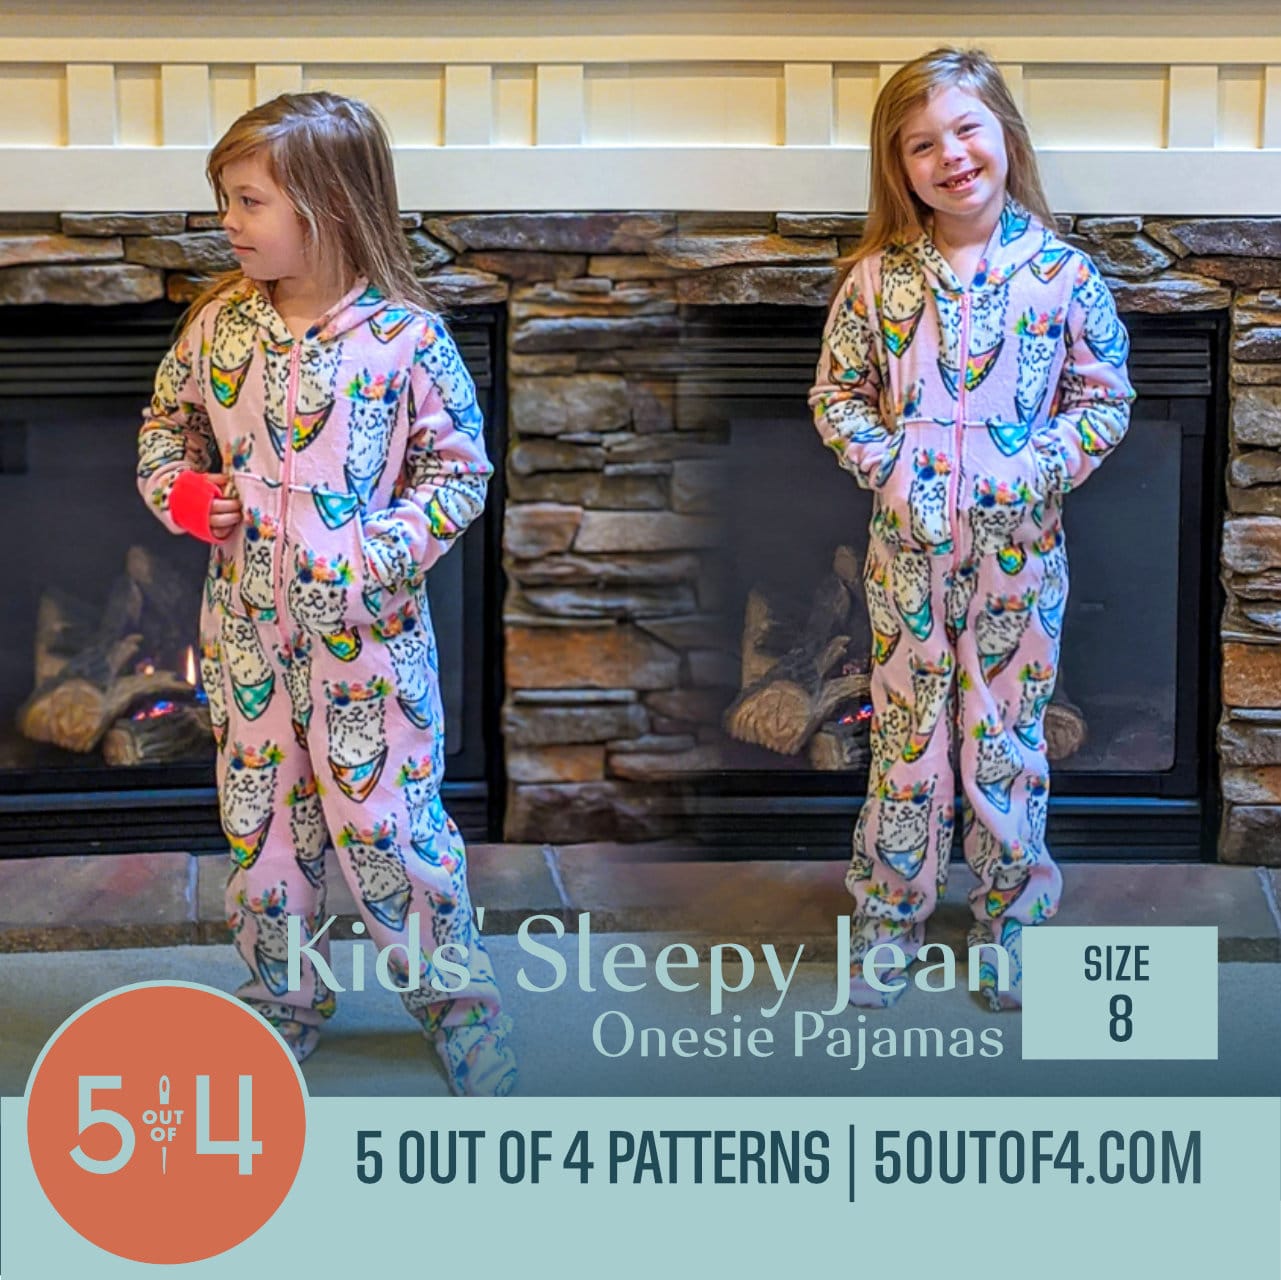 De andere dag Correctie computer Kids' Sleepy Jean Onesie Pajamas - 5 out of 4 Patterns